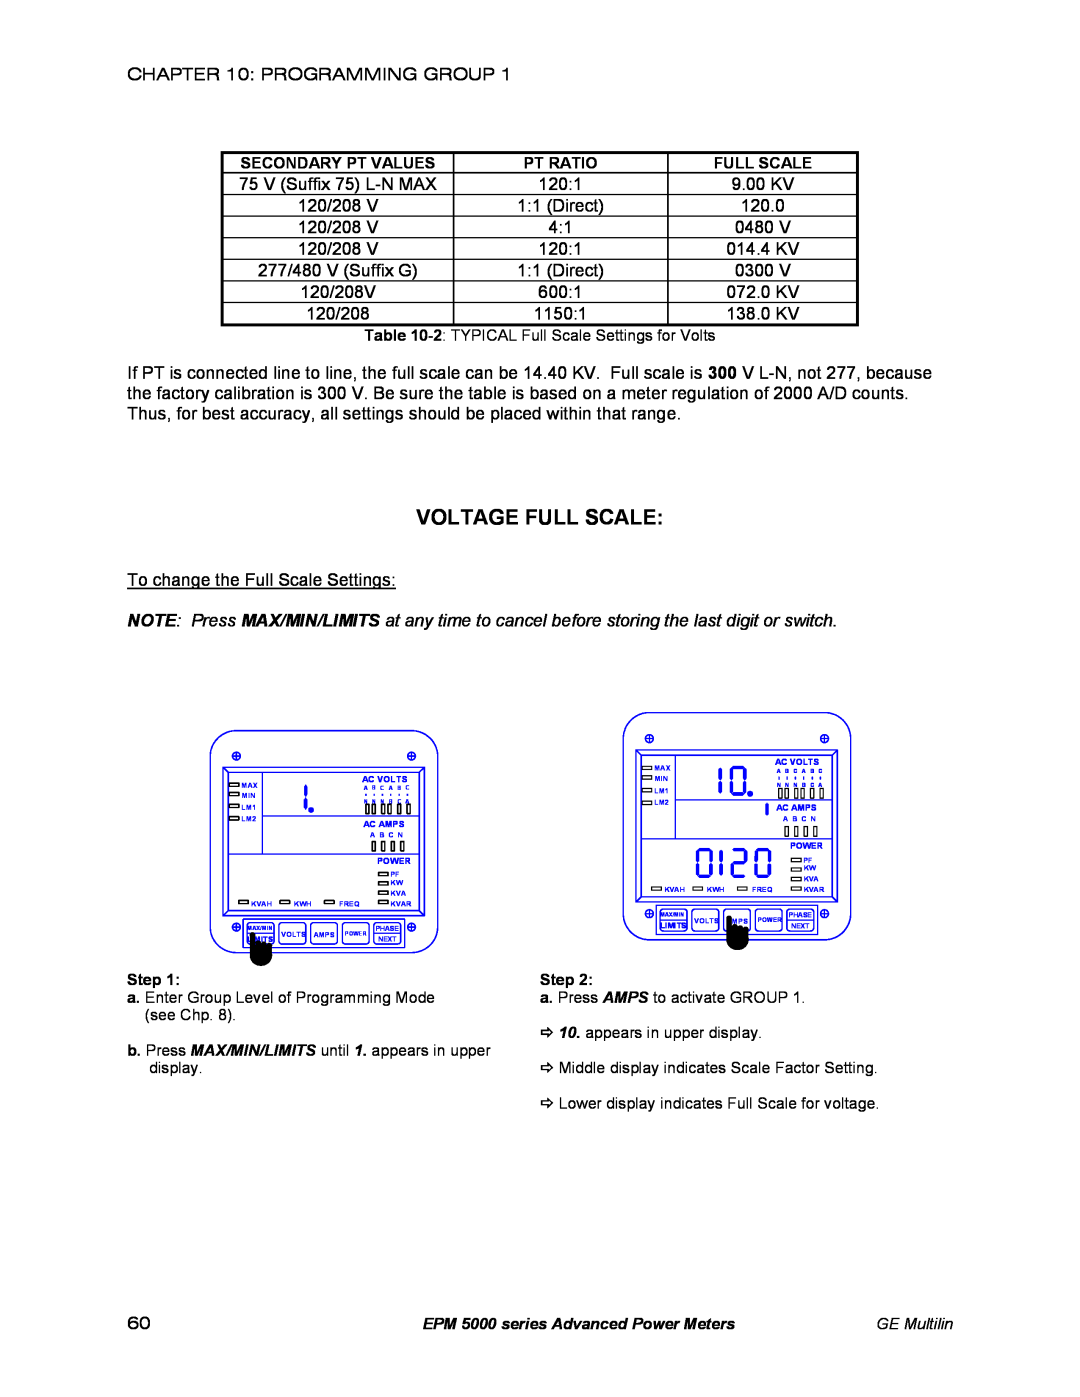 GE EPM 5300, EPM 5200, EPM 5350 instruction manual Voltage Full Scale 